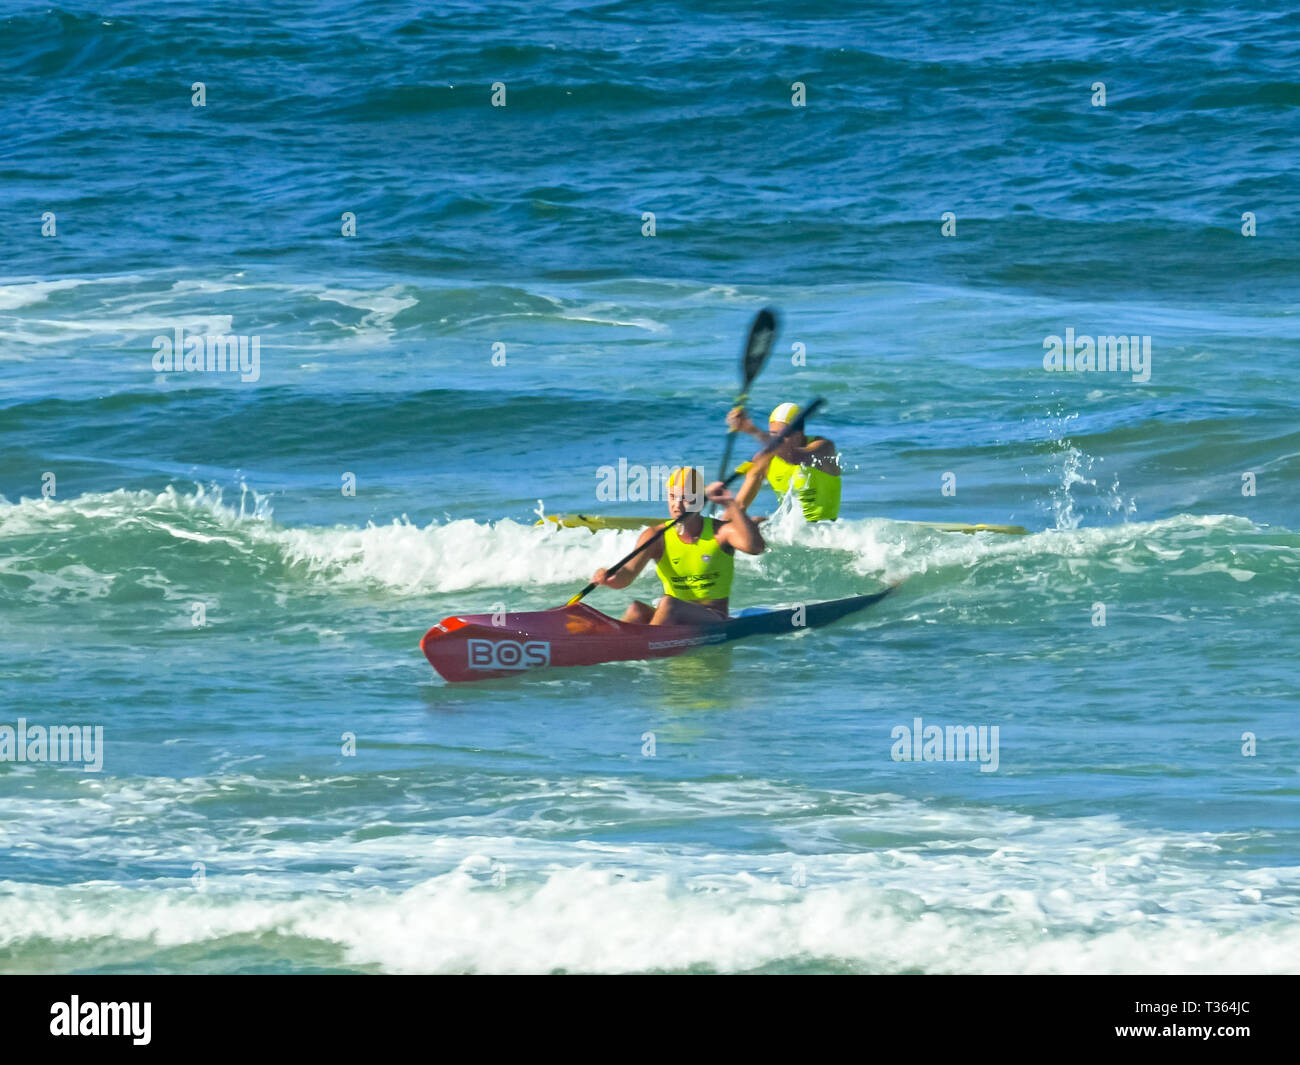 ALEXANDRA HEADLAND, QUEENSLAND, AUSTRALIA- APRIL 24: surf life saving surf ski race on the sunshine coast of australia Stock Photo